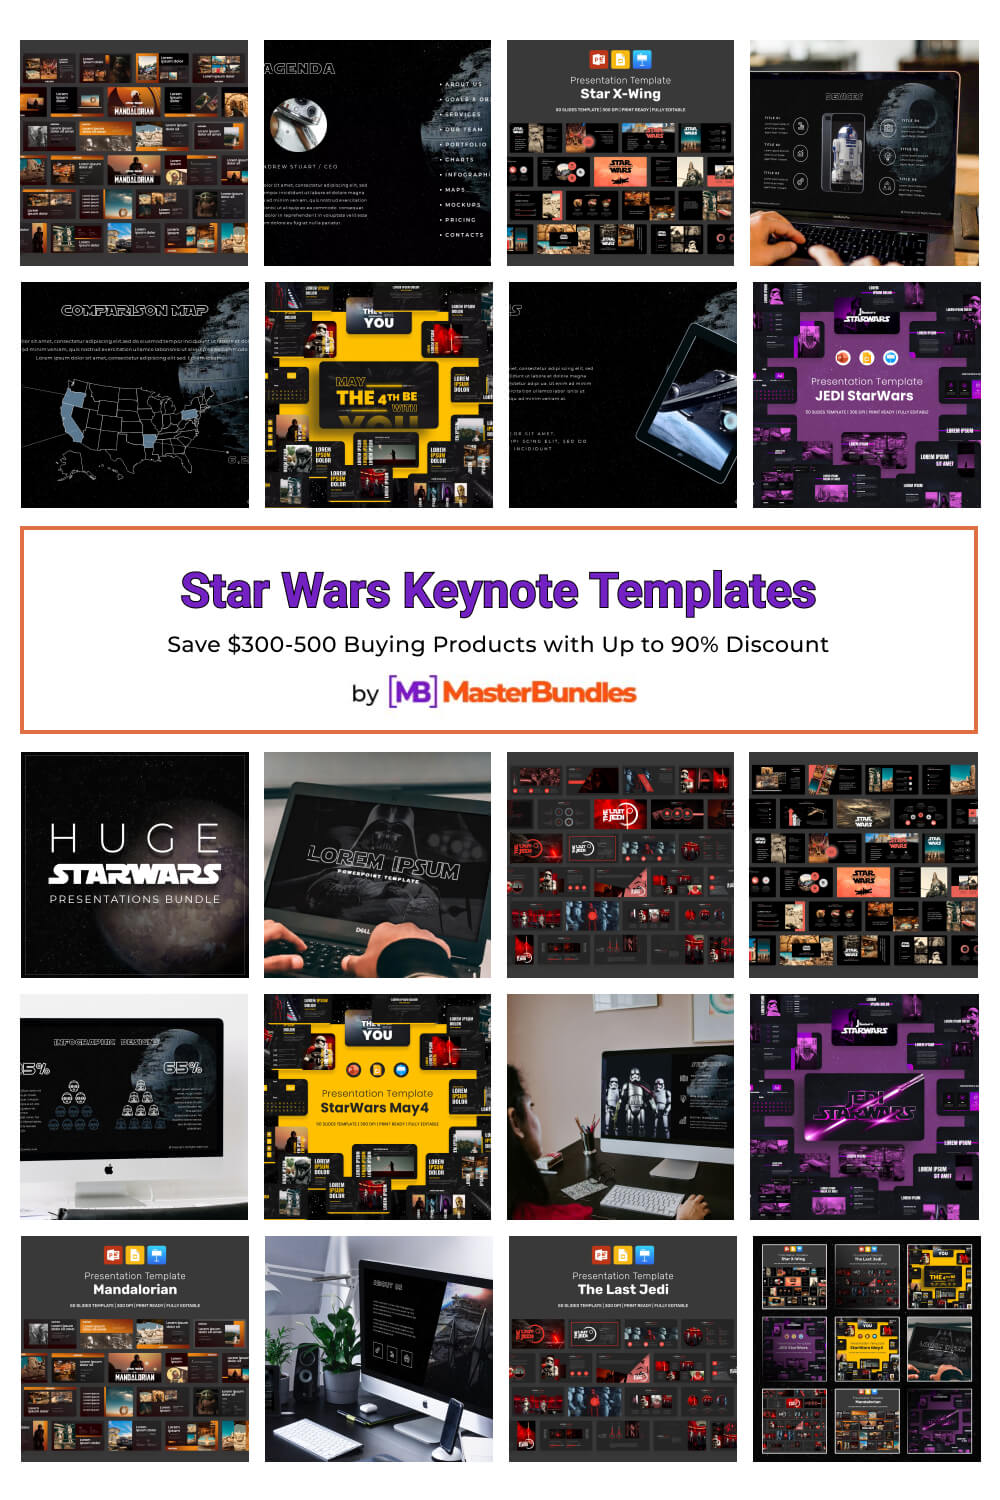 star wars keynote templates pinterest image.